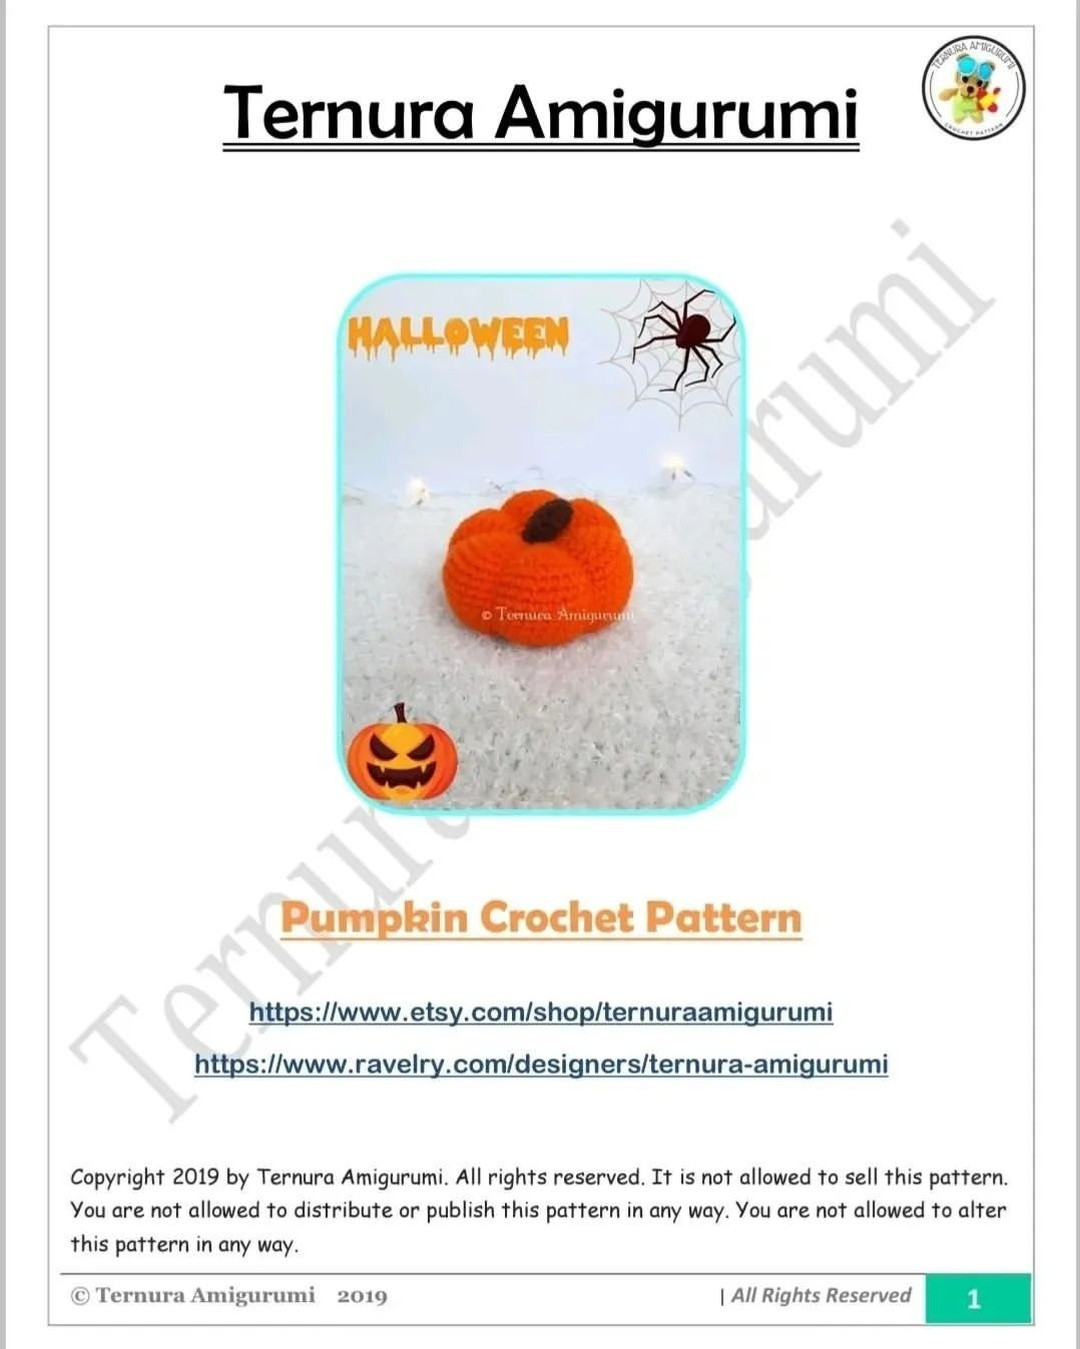 Halloween pumpkin crochet pattern with brown stalks